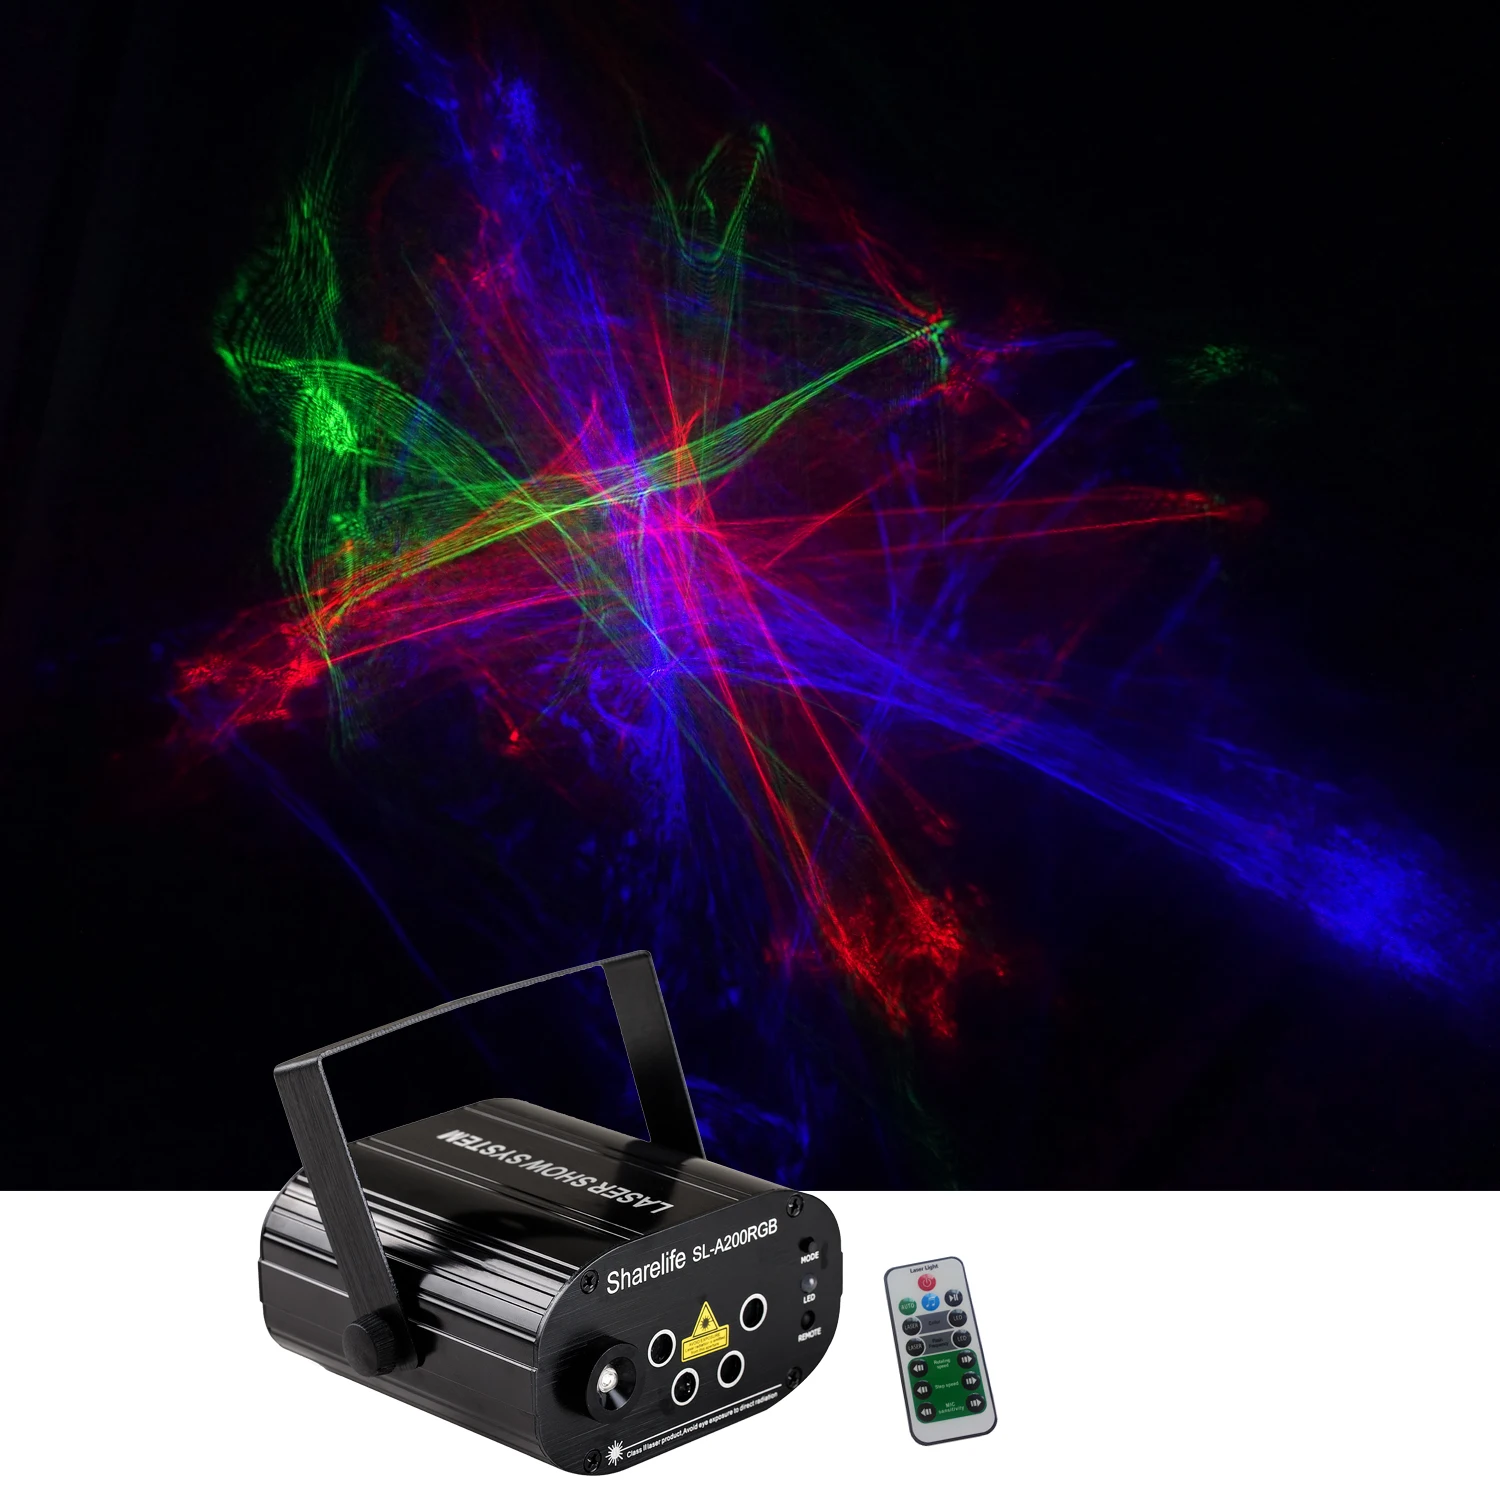 Sharelife Mini 4 Lens RGRB Hypnotic Aurora Laser Light Mix Blue LED Remote Control Motor Speed DJ Gig Party Home Stage Lighting